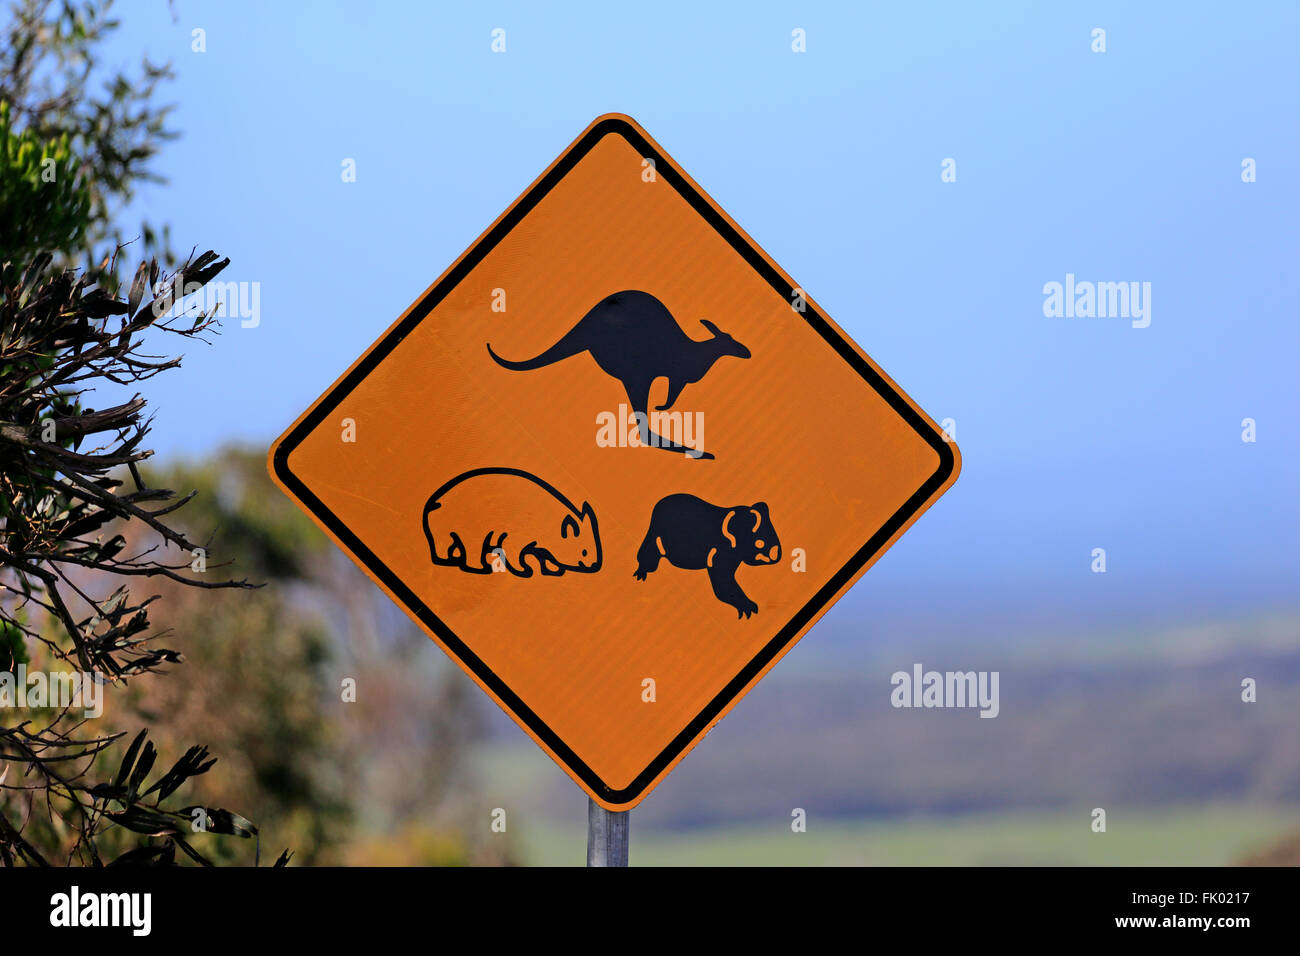 Traffic sign, Protection for Koala, Wombat, Kangaroo, Victoria, Australia Stock Photo